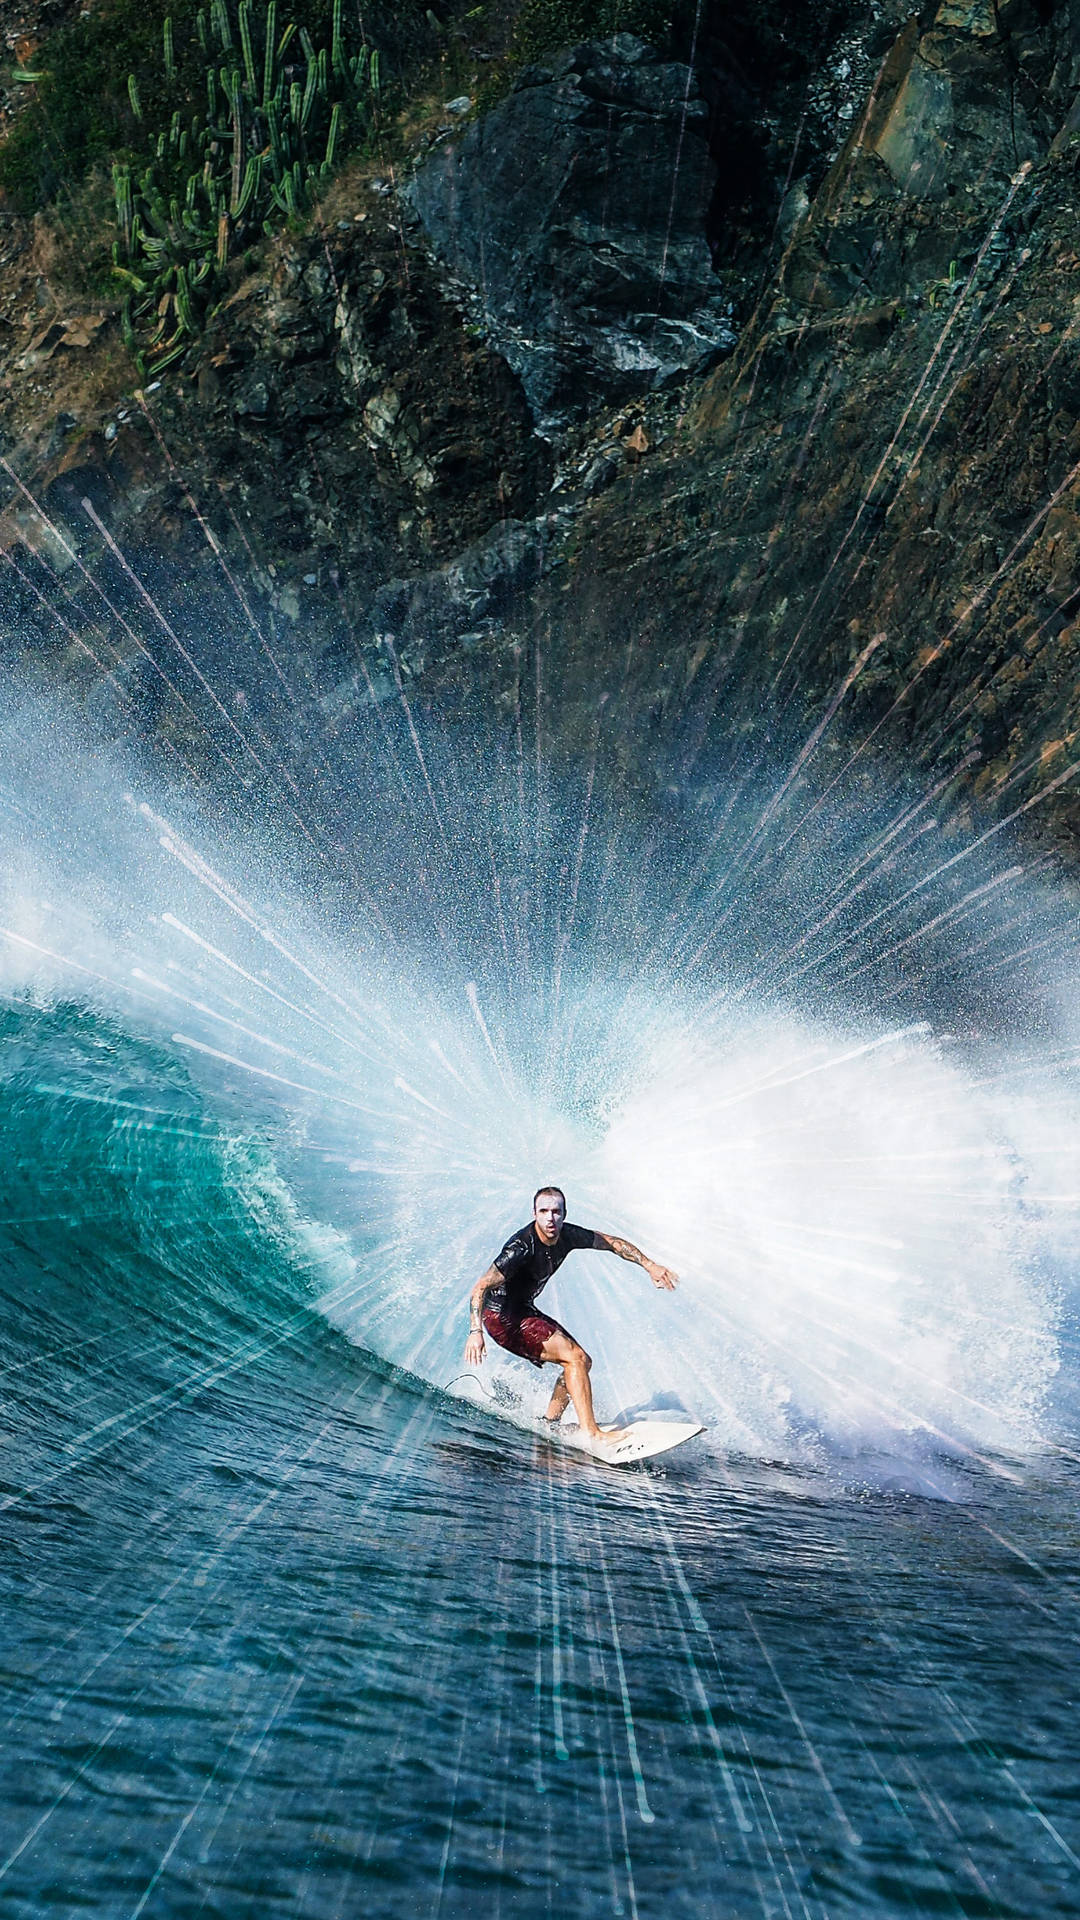 Surfing 1440 X 2560 Wallpaper